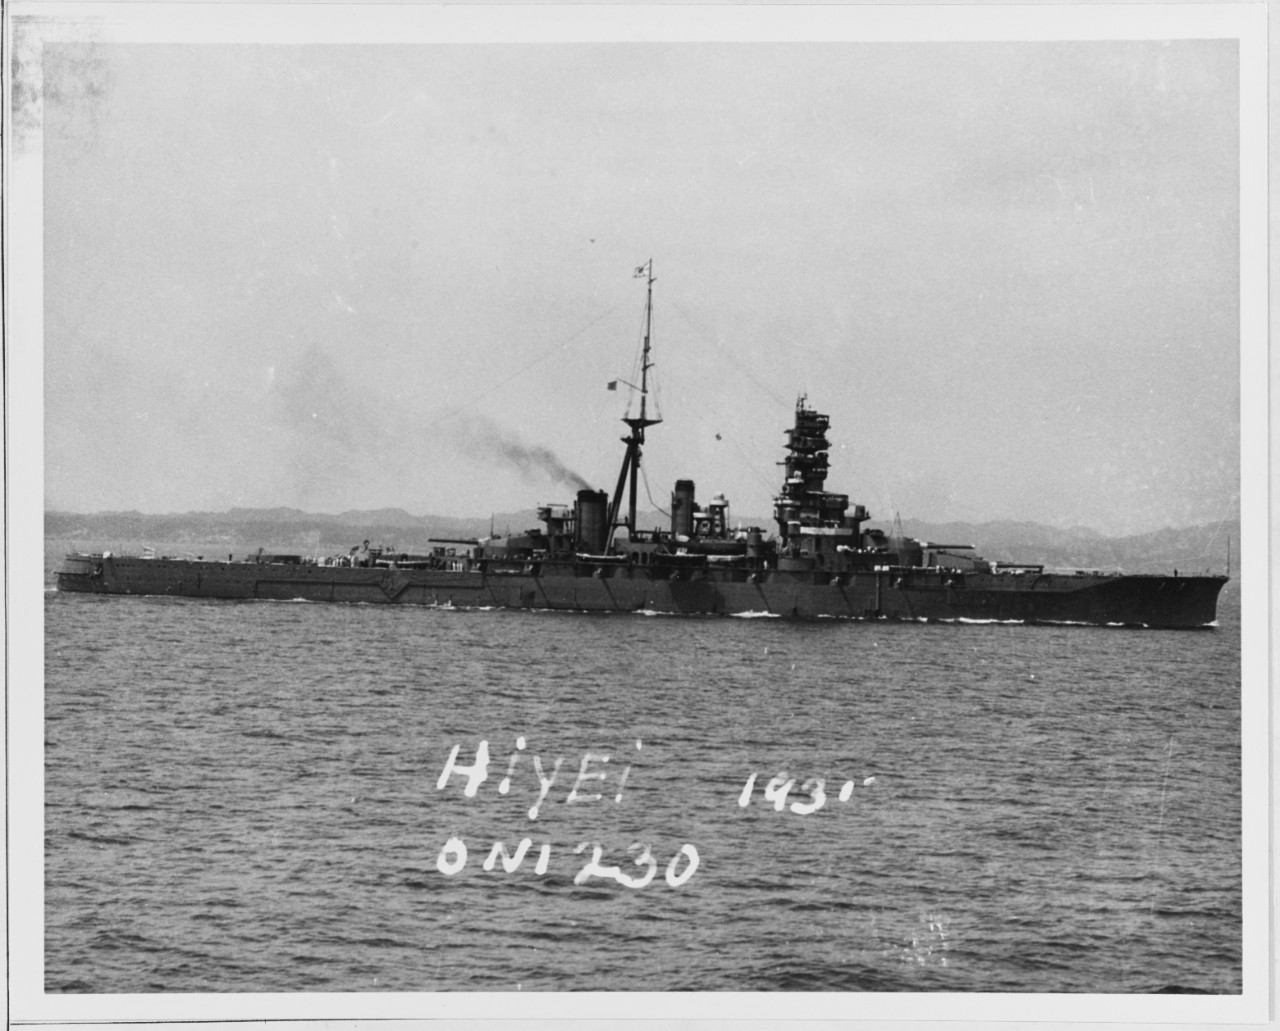 Japanese ship HIJMS HIYEI